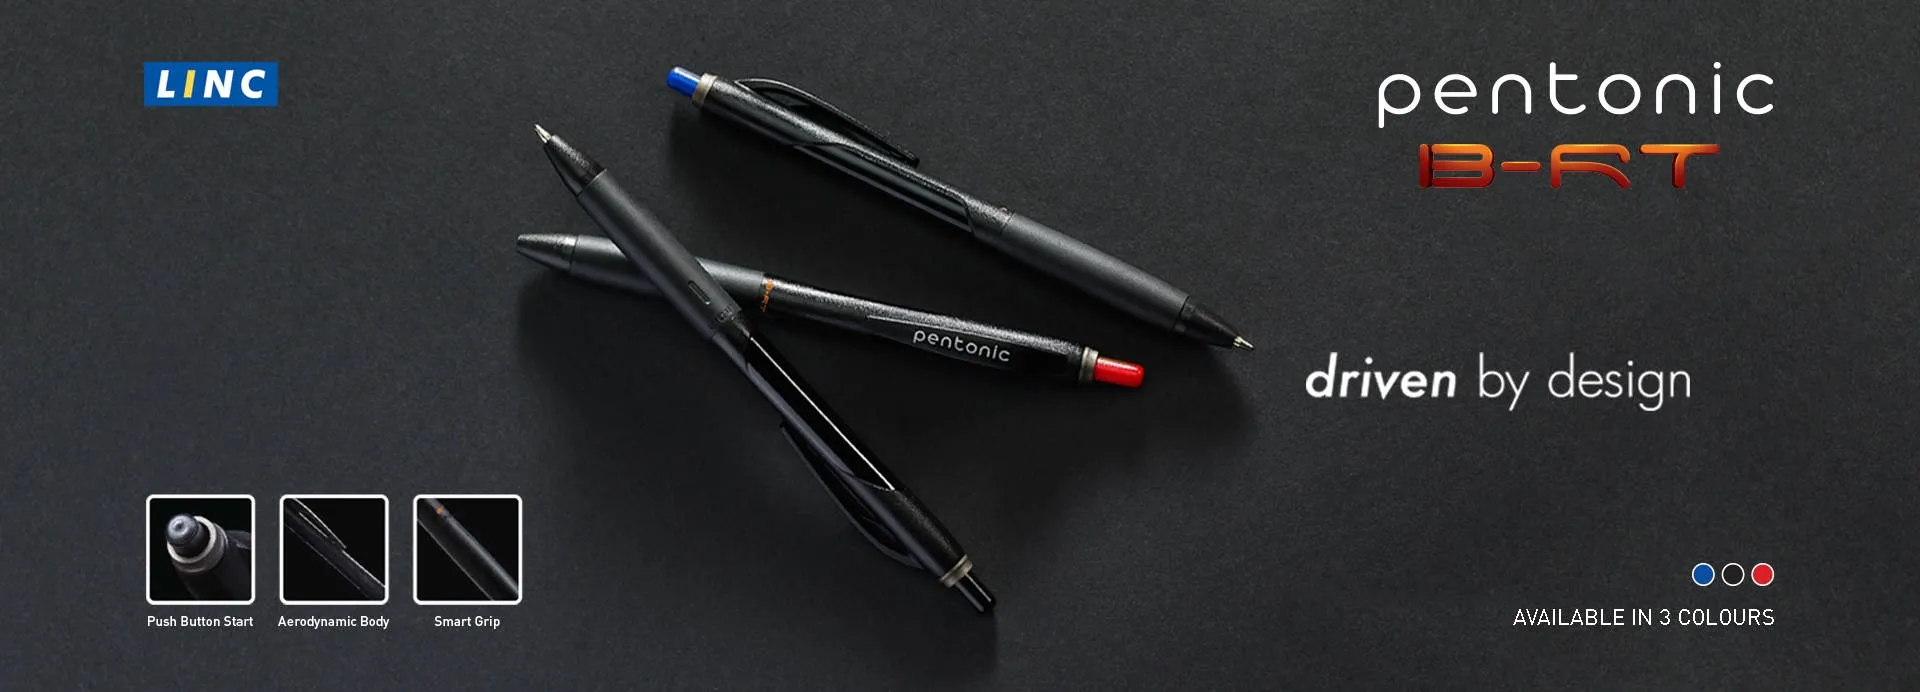 Linc Pentonic B - RT Ball Pen 0.7 mm Blue Pen Pack of 5 Pen